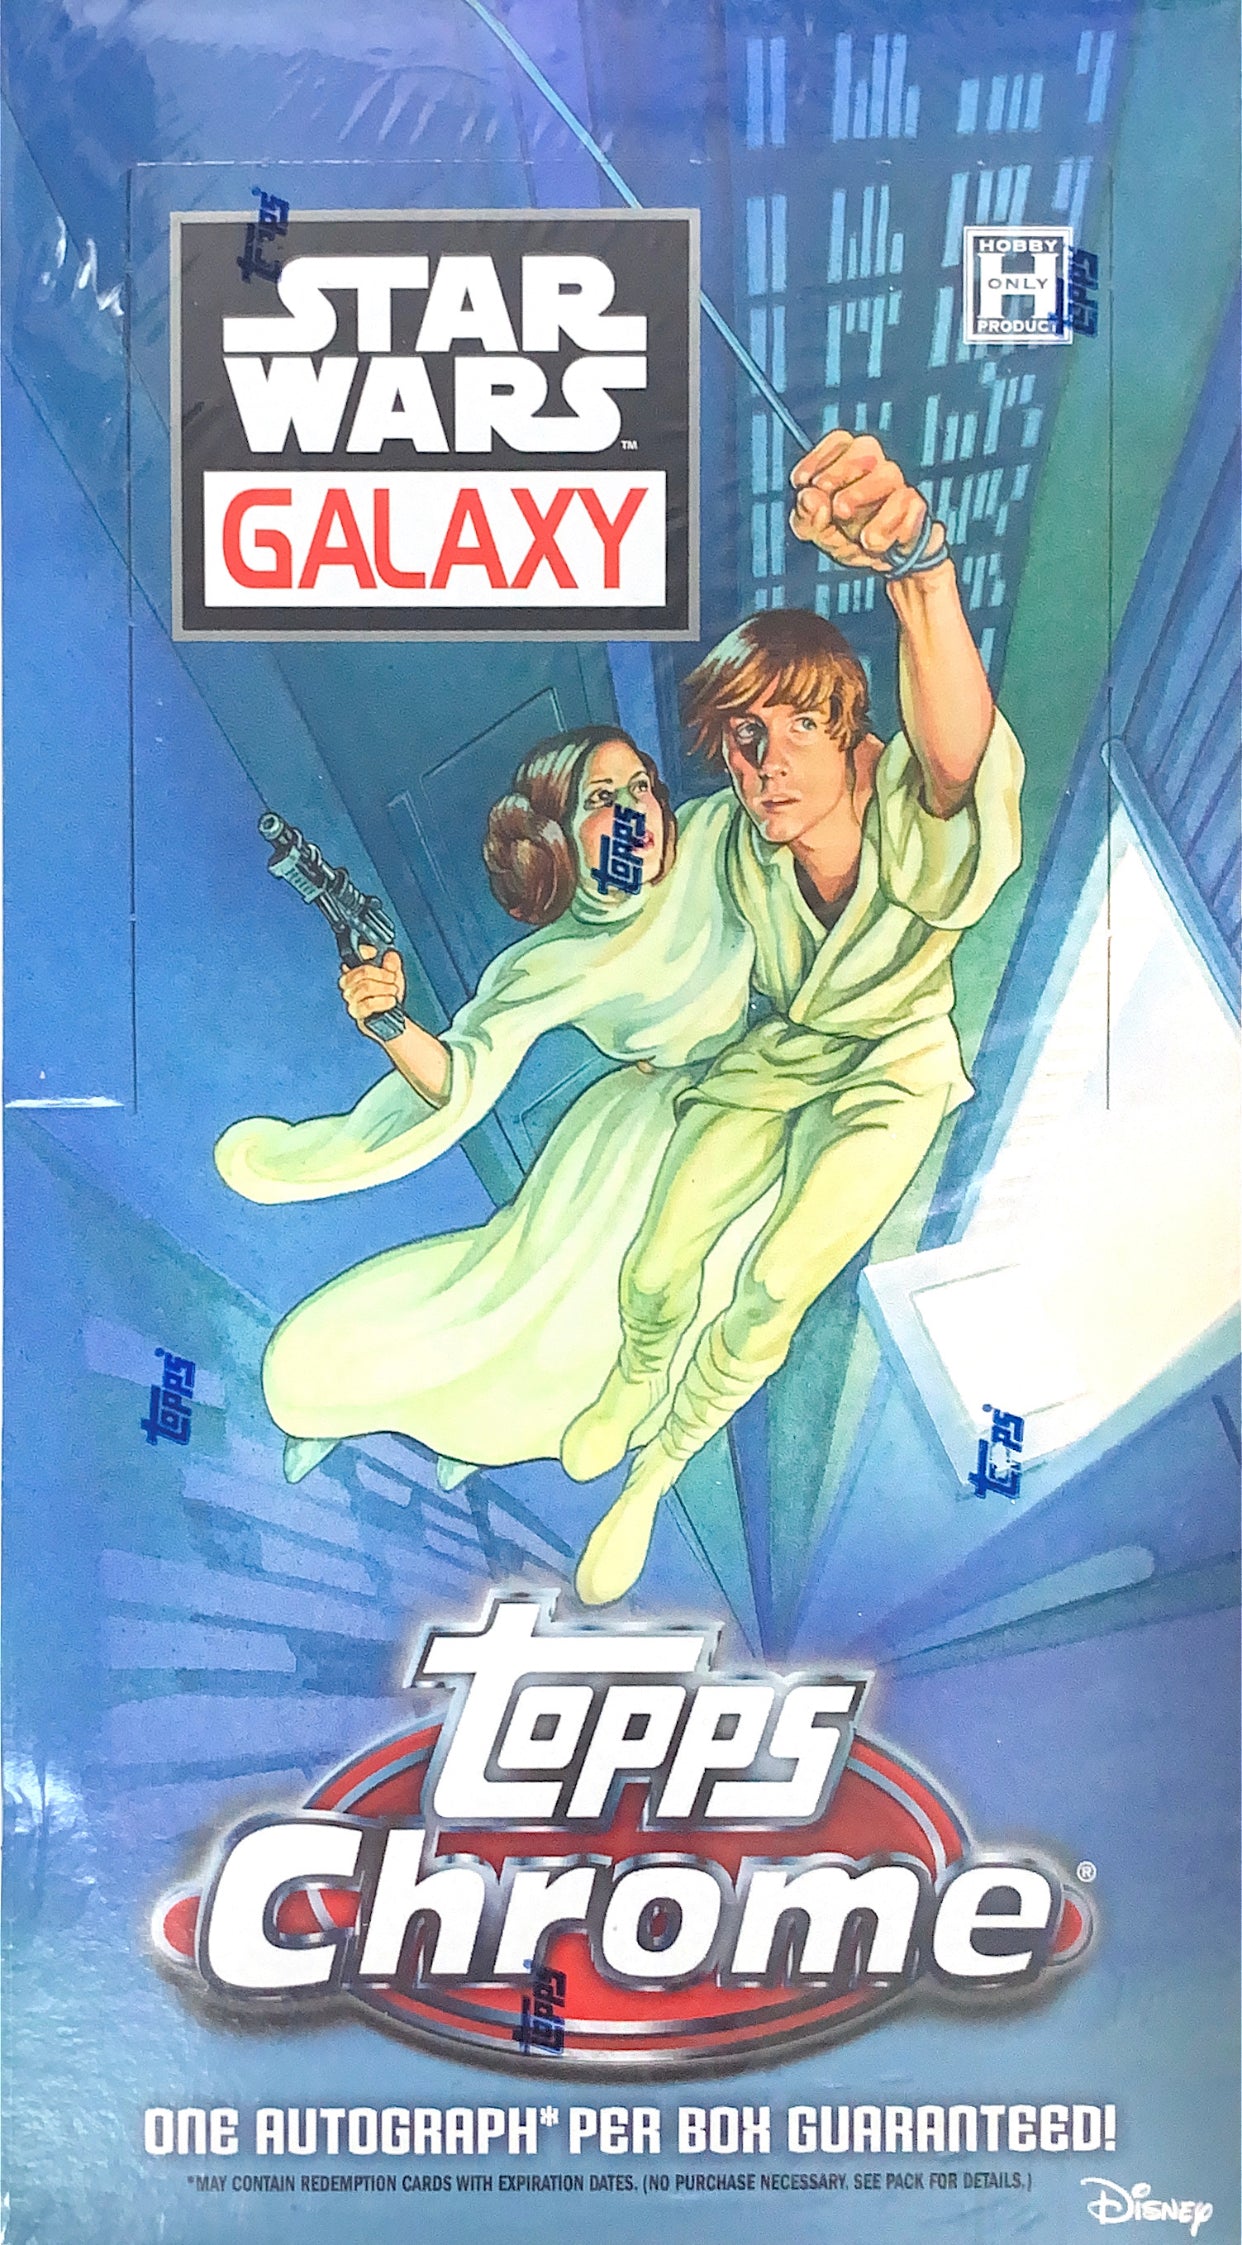 Topps Chrome Star Wars Galaxy Hobby Box